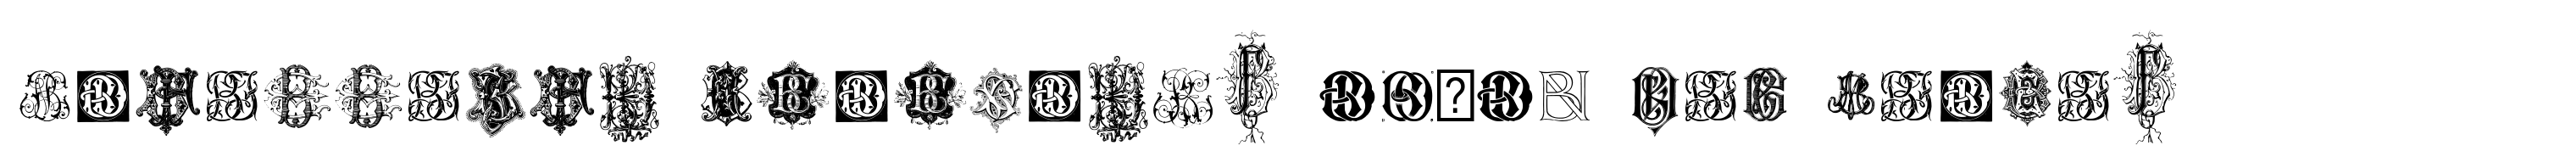 Intellecta Monograms BD-BO New Series